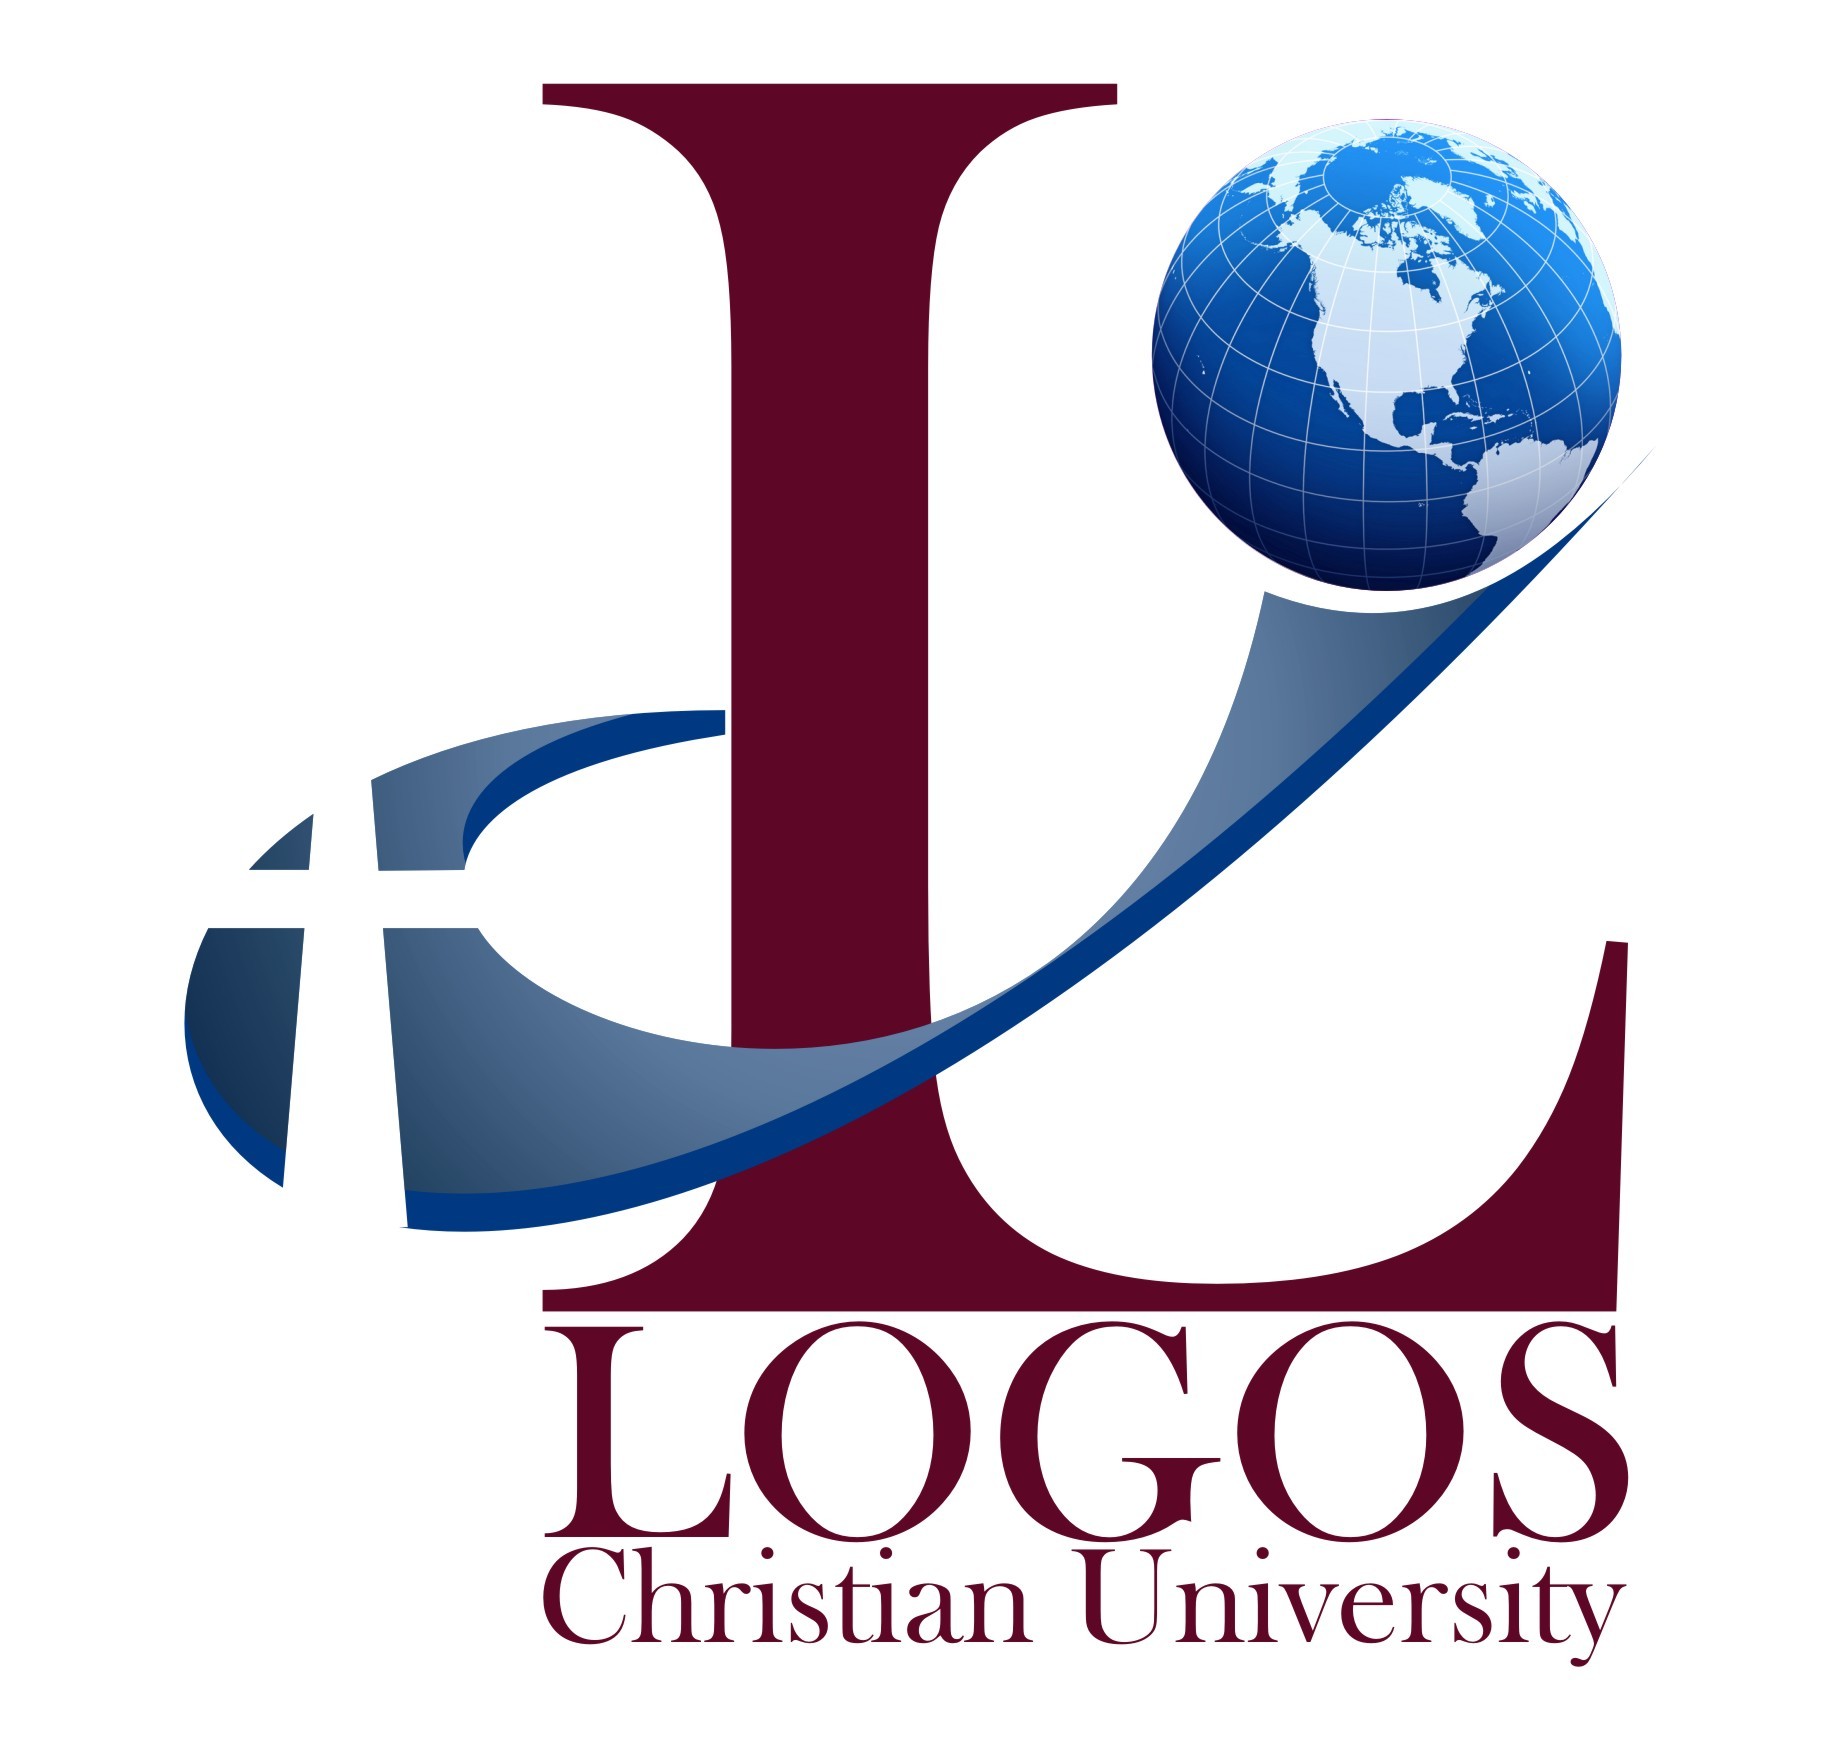 Logos christian university final